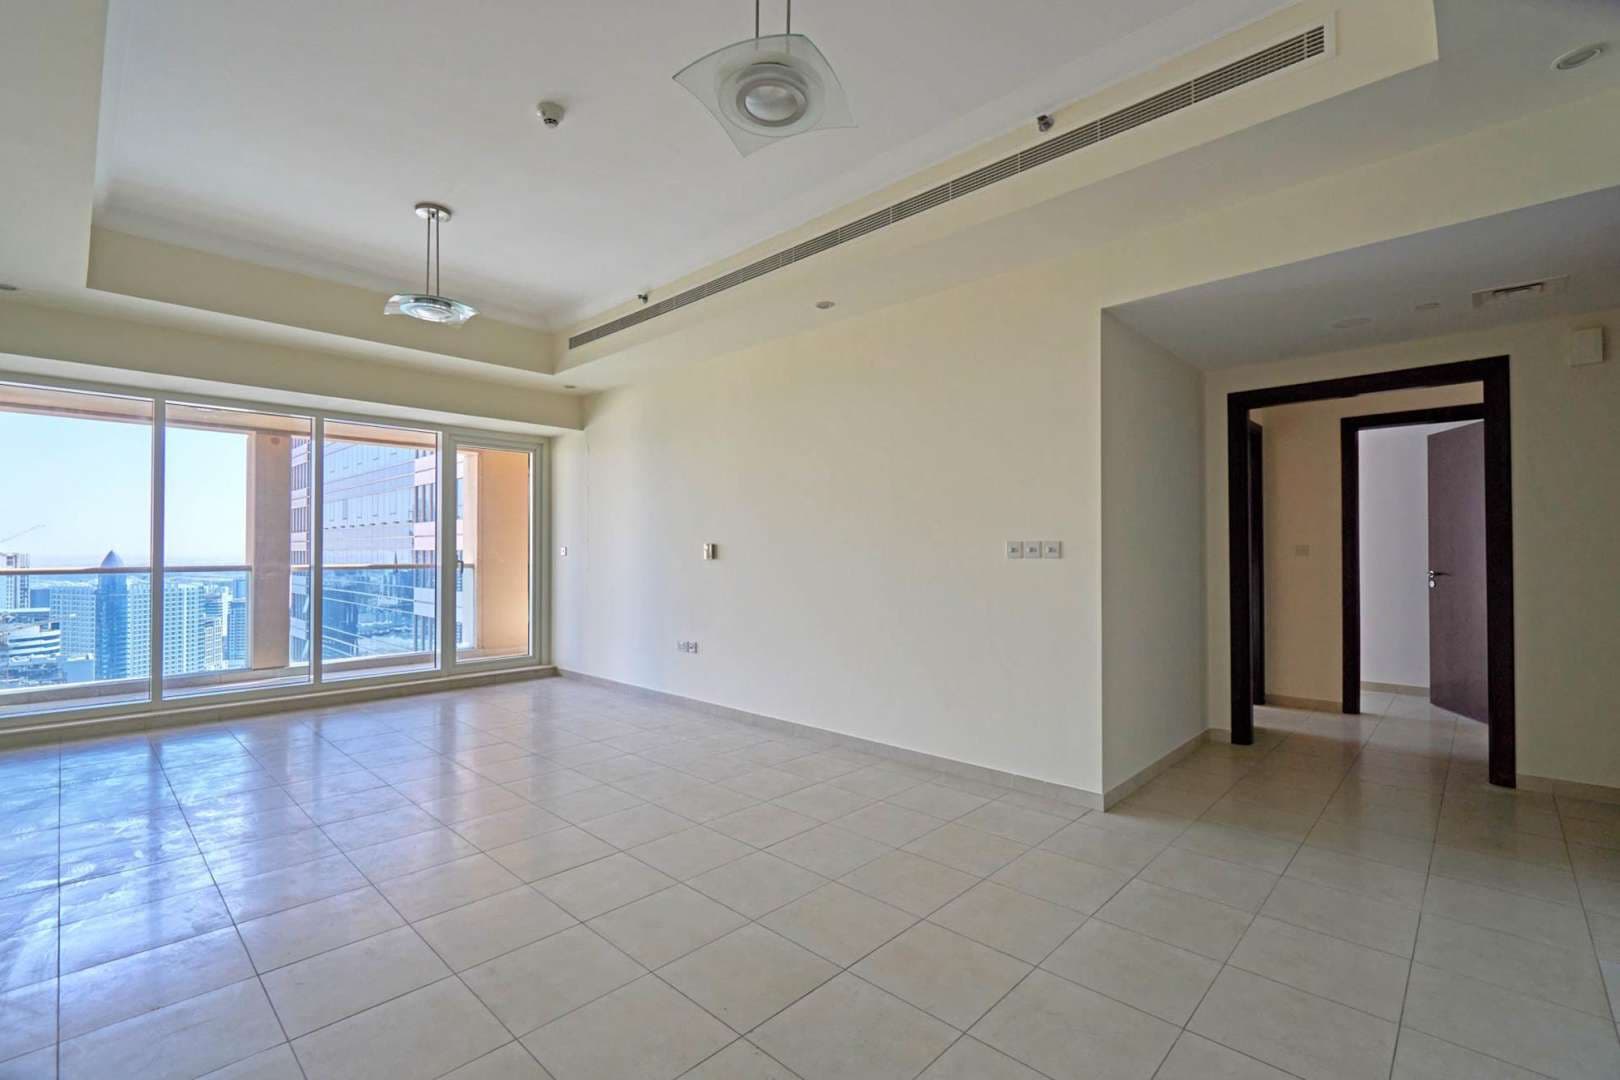 2 Bedroom Apartment For Rent Churchill Executive Tower Lp05714 263b013e4a3d9400.jpg